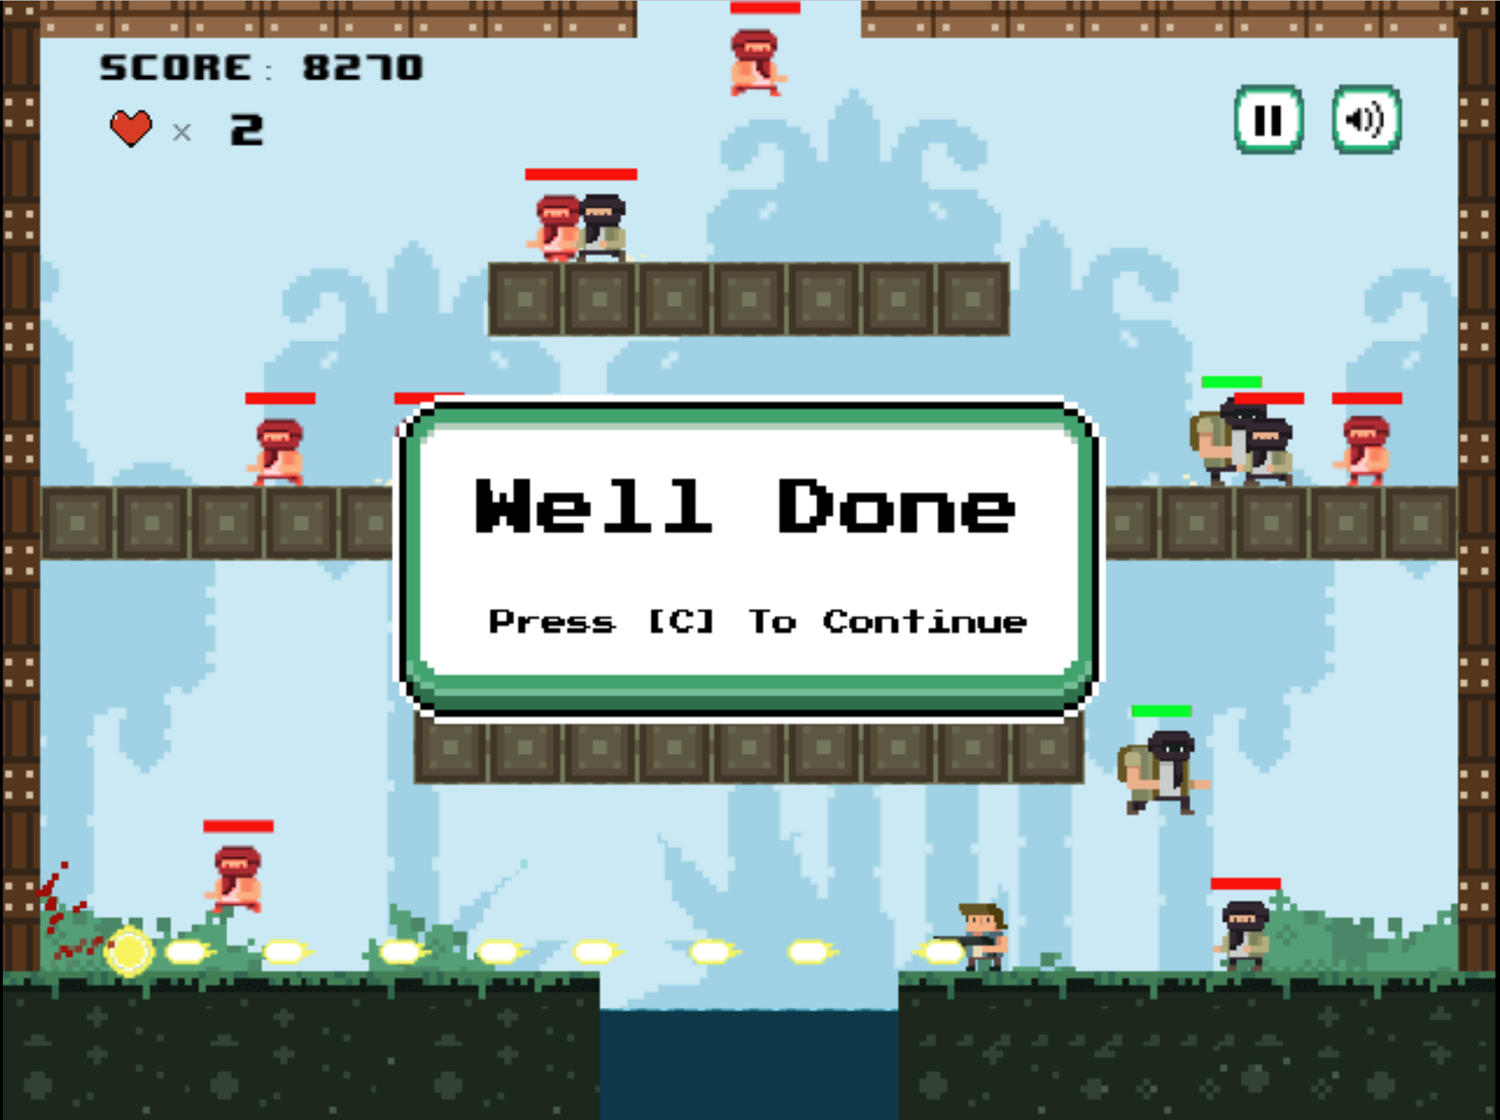 Team Kaboom Game Level Complete Screen Screenshot.